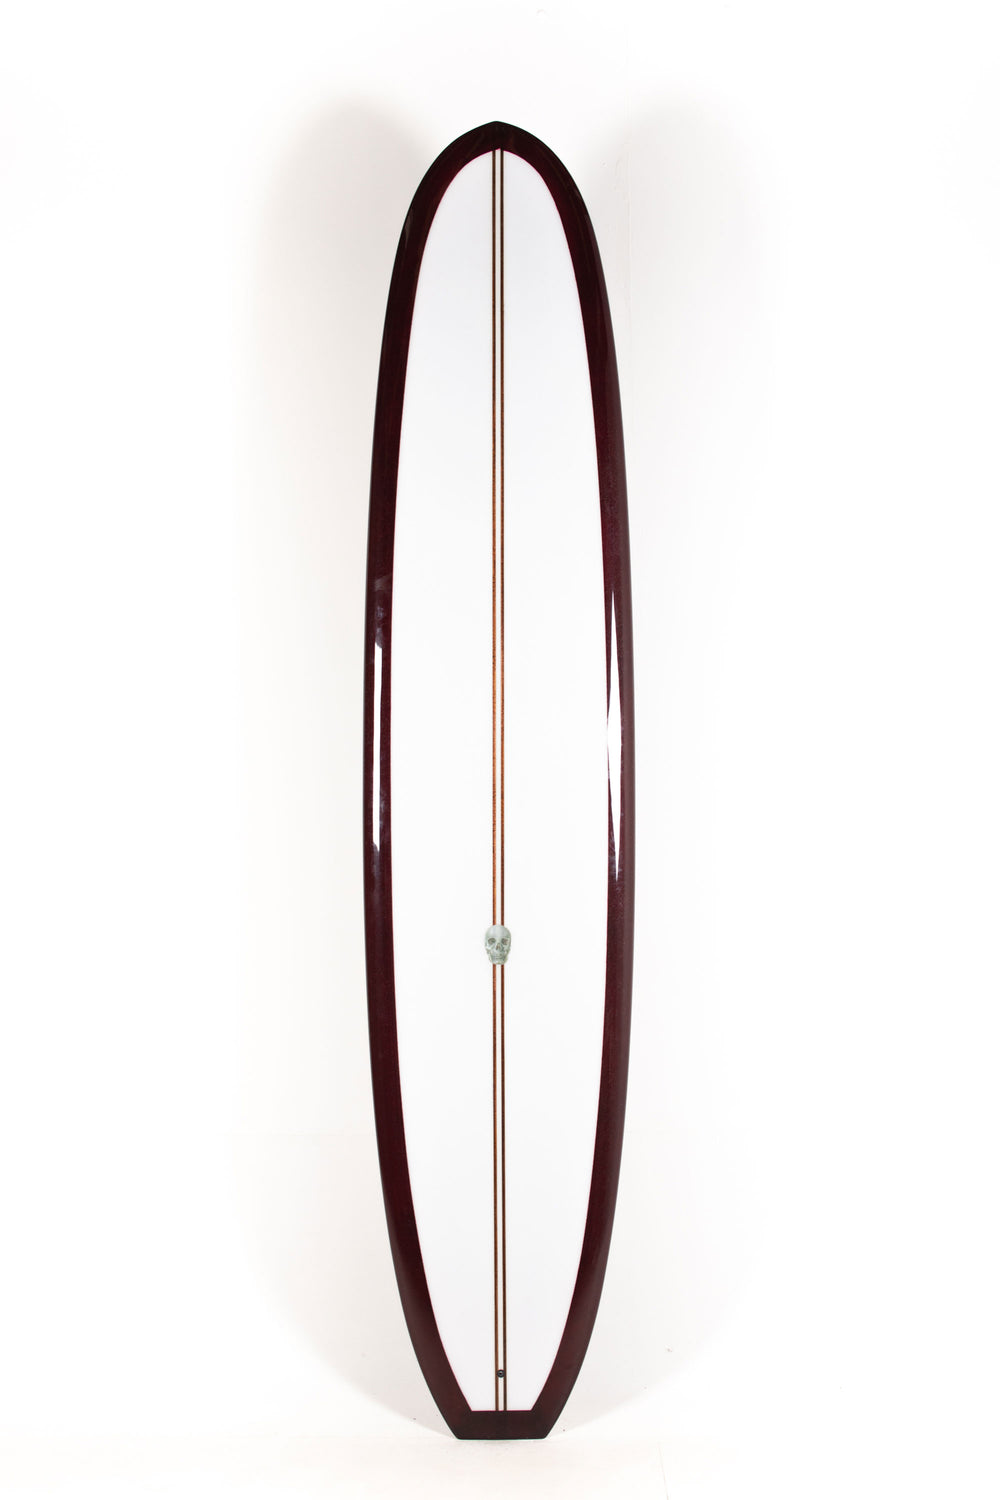 Pukas Surf Shop - Christenson Surfboard  - SCARLET BEGONIA by Chris Christenson - 9'3” x 23